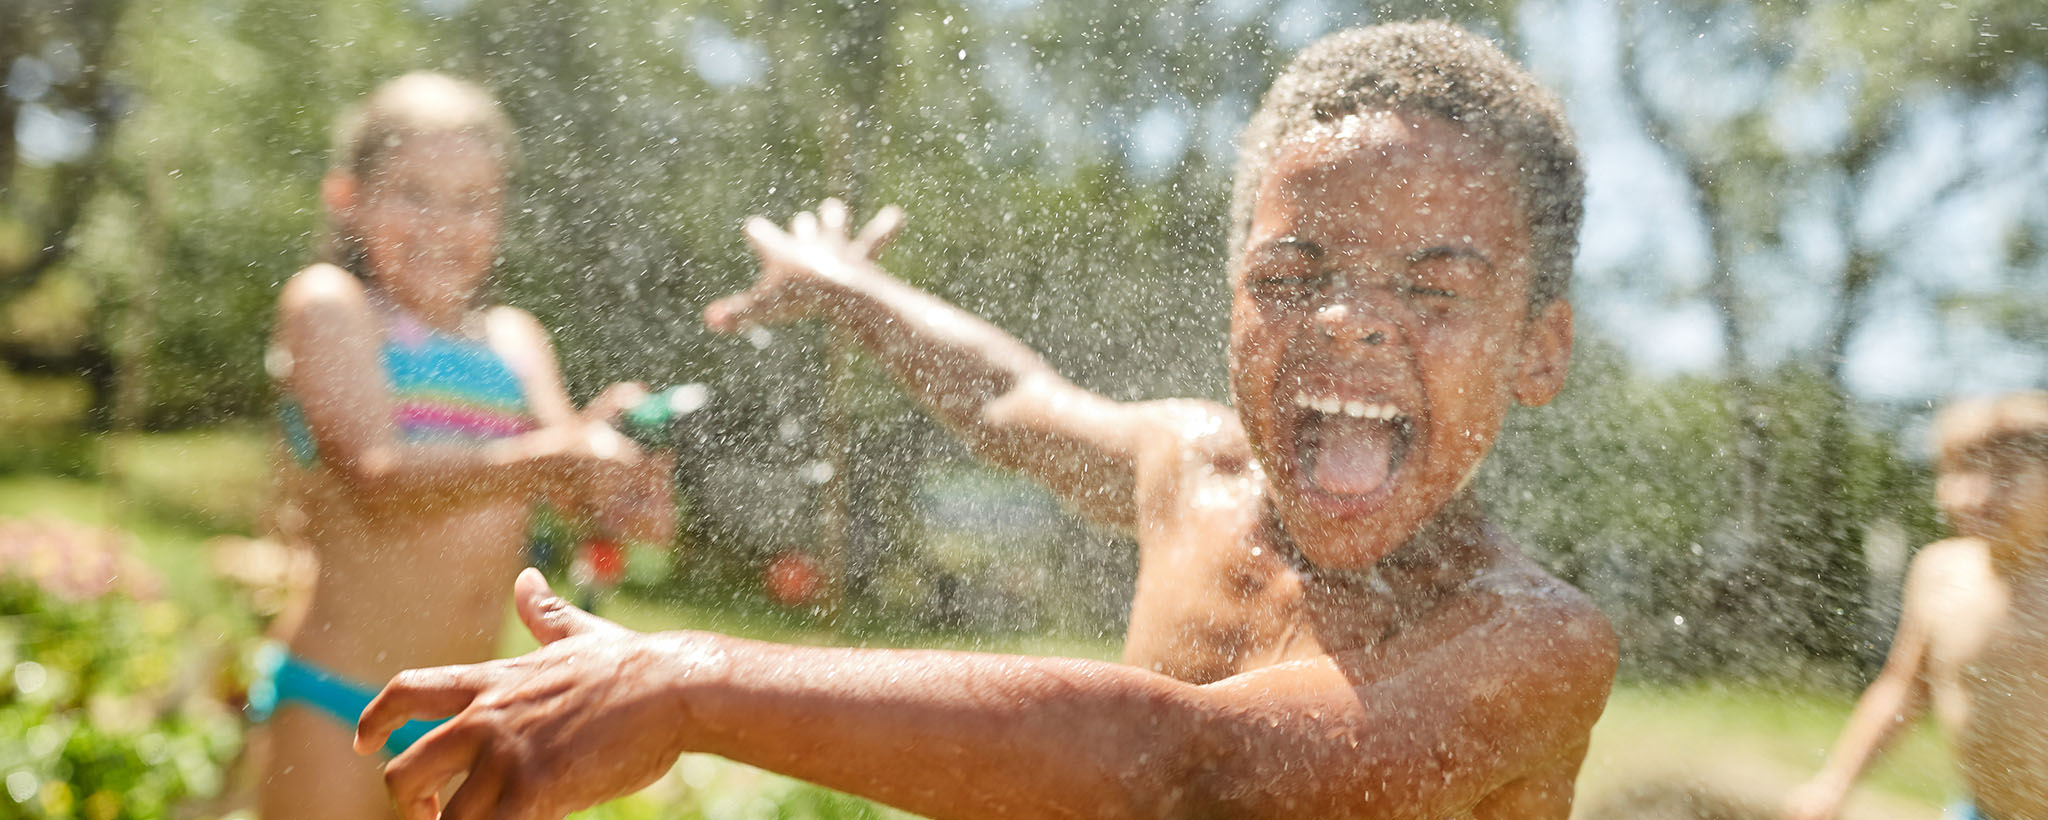 children play in a water sprinkler